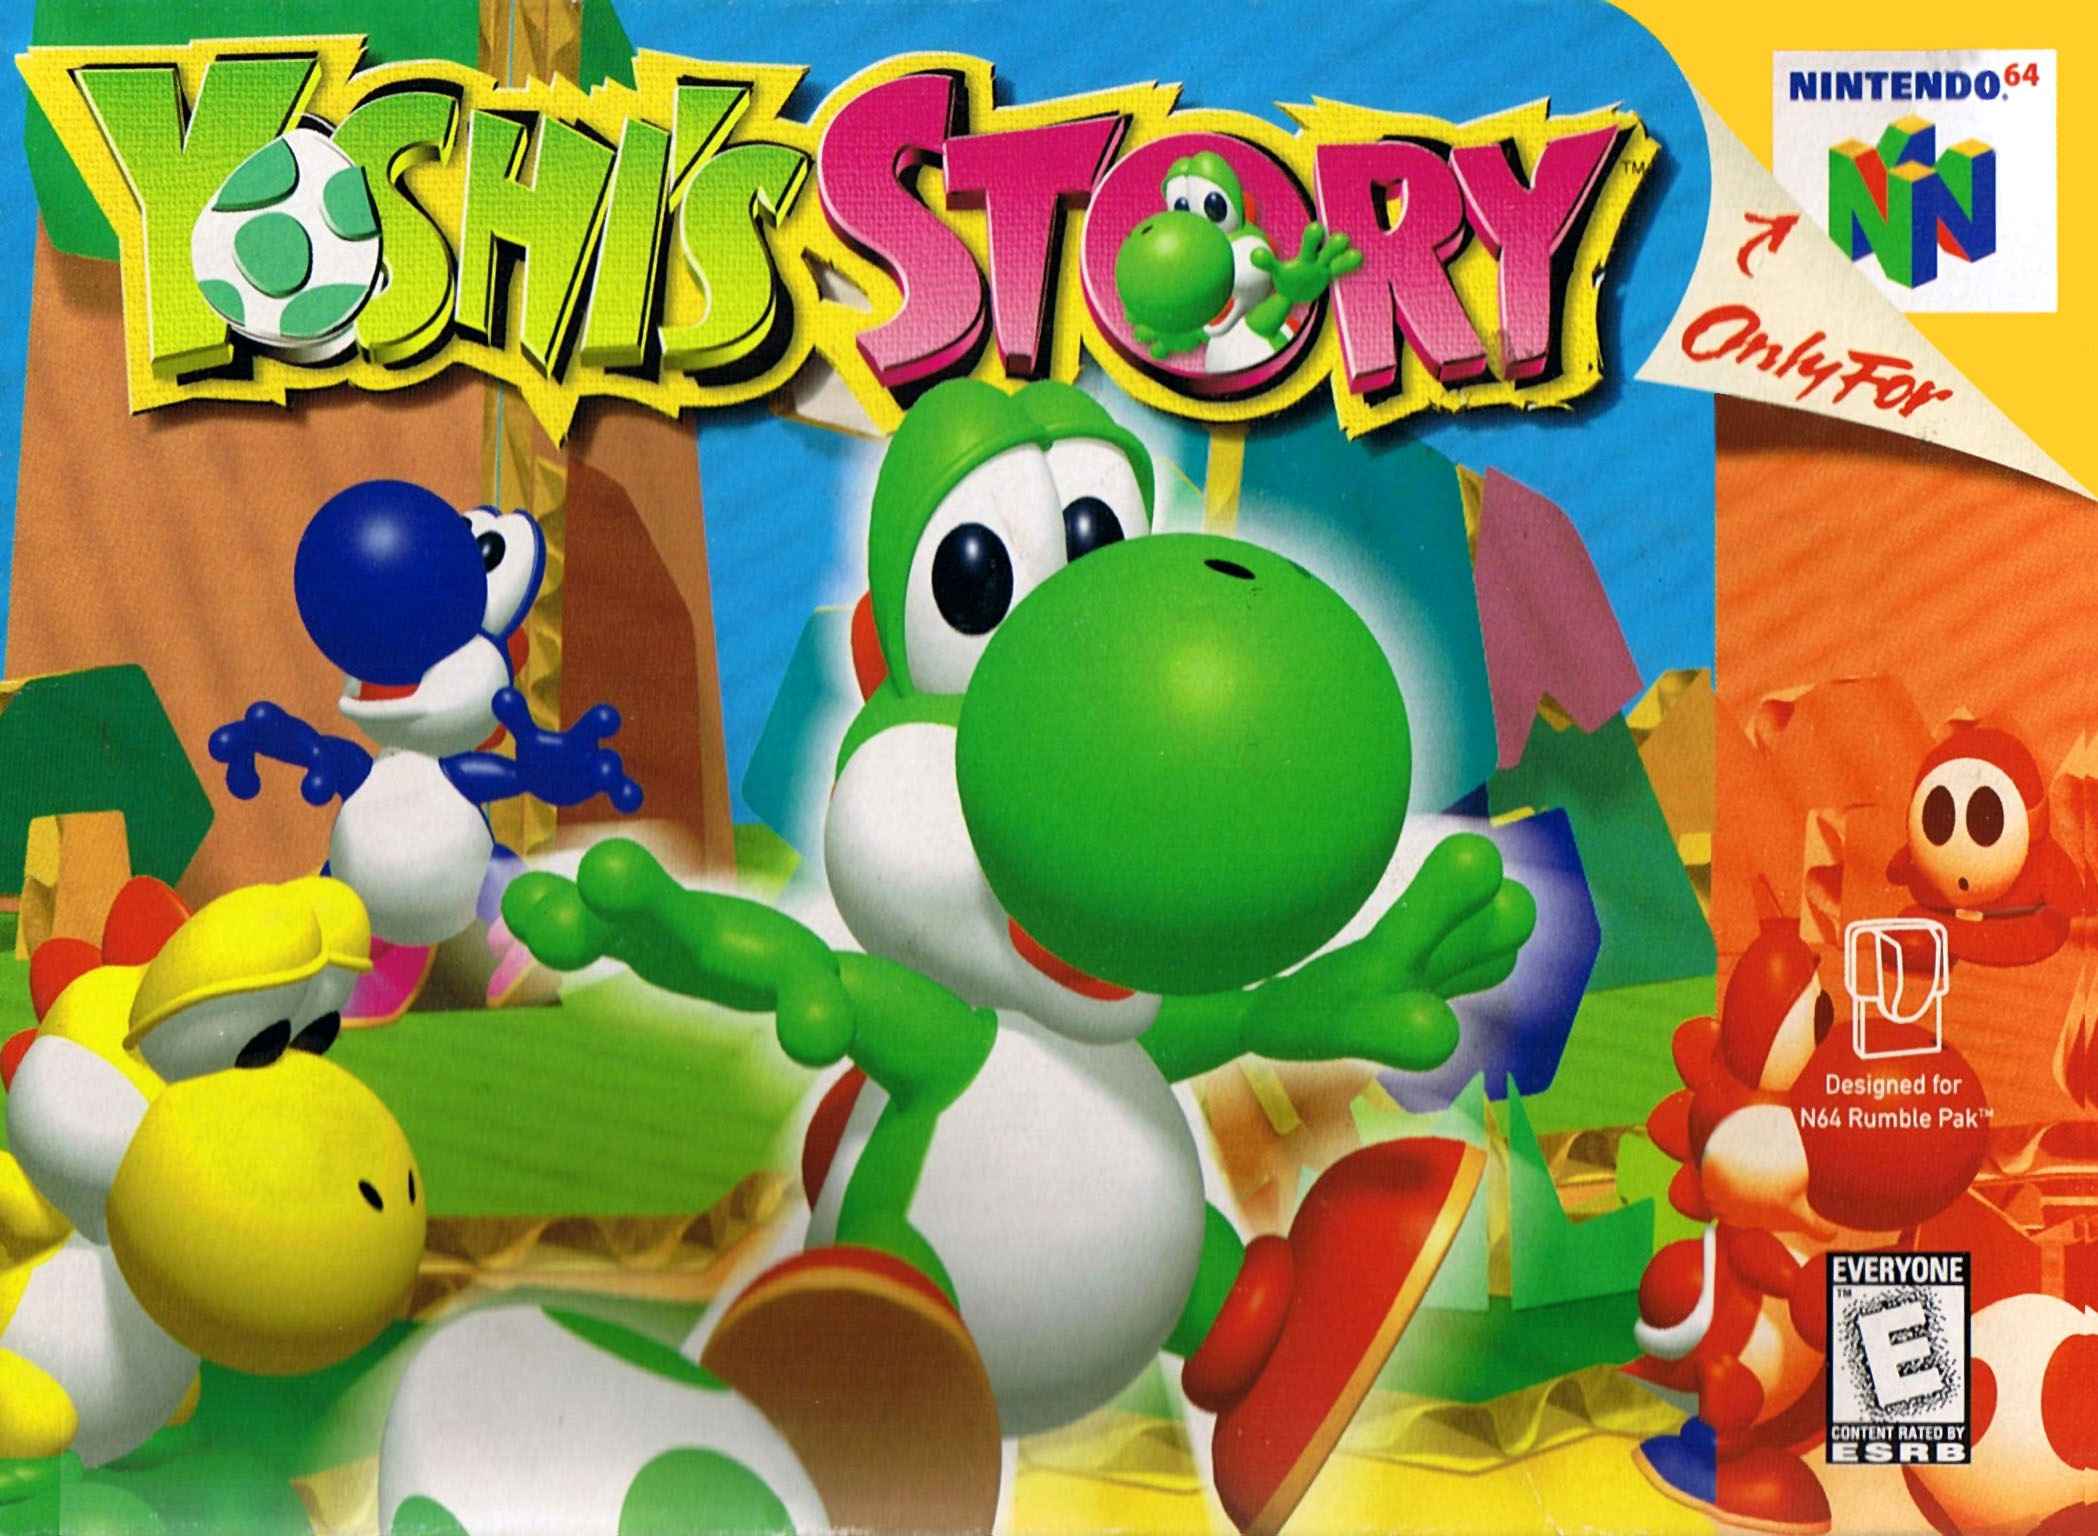 Yoshi’s Story N64